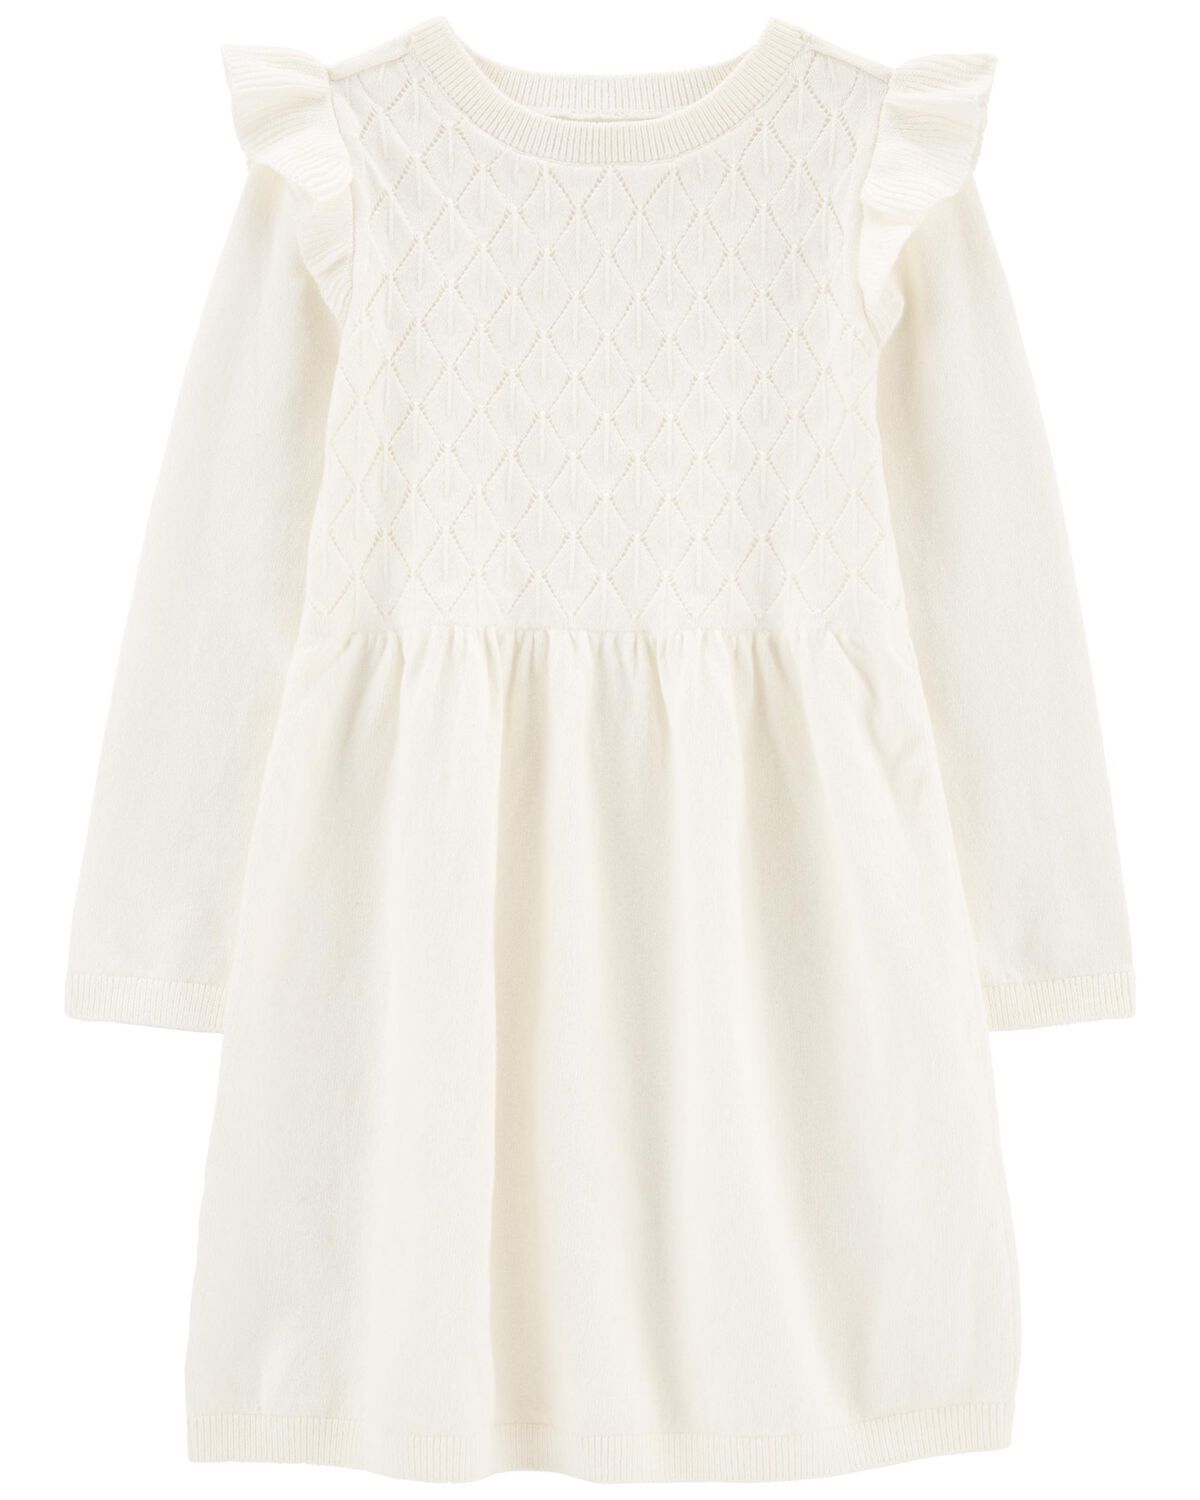 Ivory Toddler Sweater Dress | carters.com | Carter's